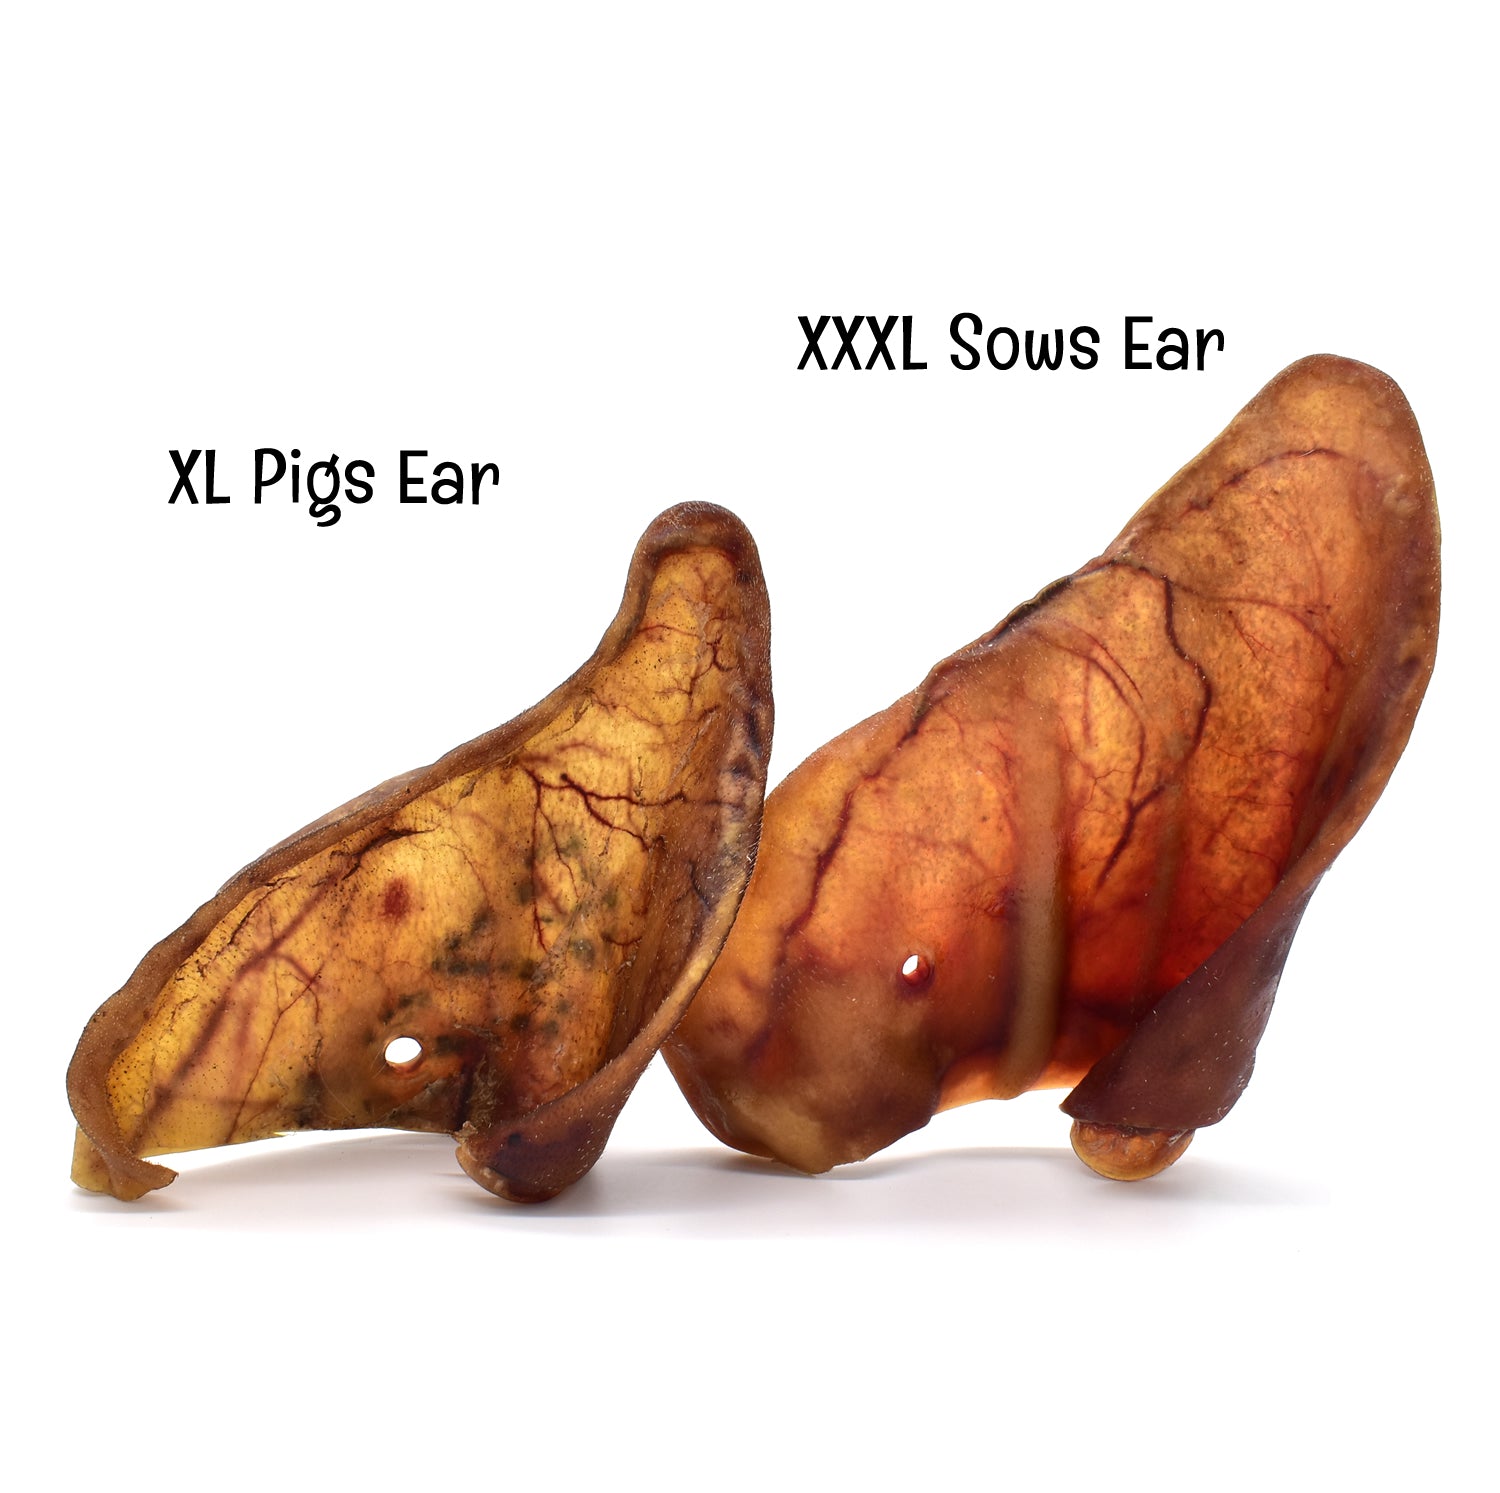 XXXL Massive Jumbo Sows Ears x 30 (image 1 - size comparison)